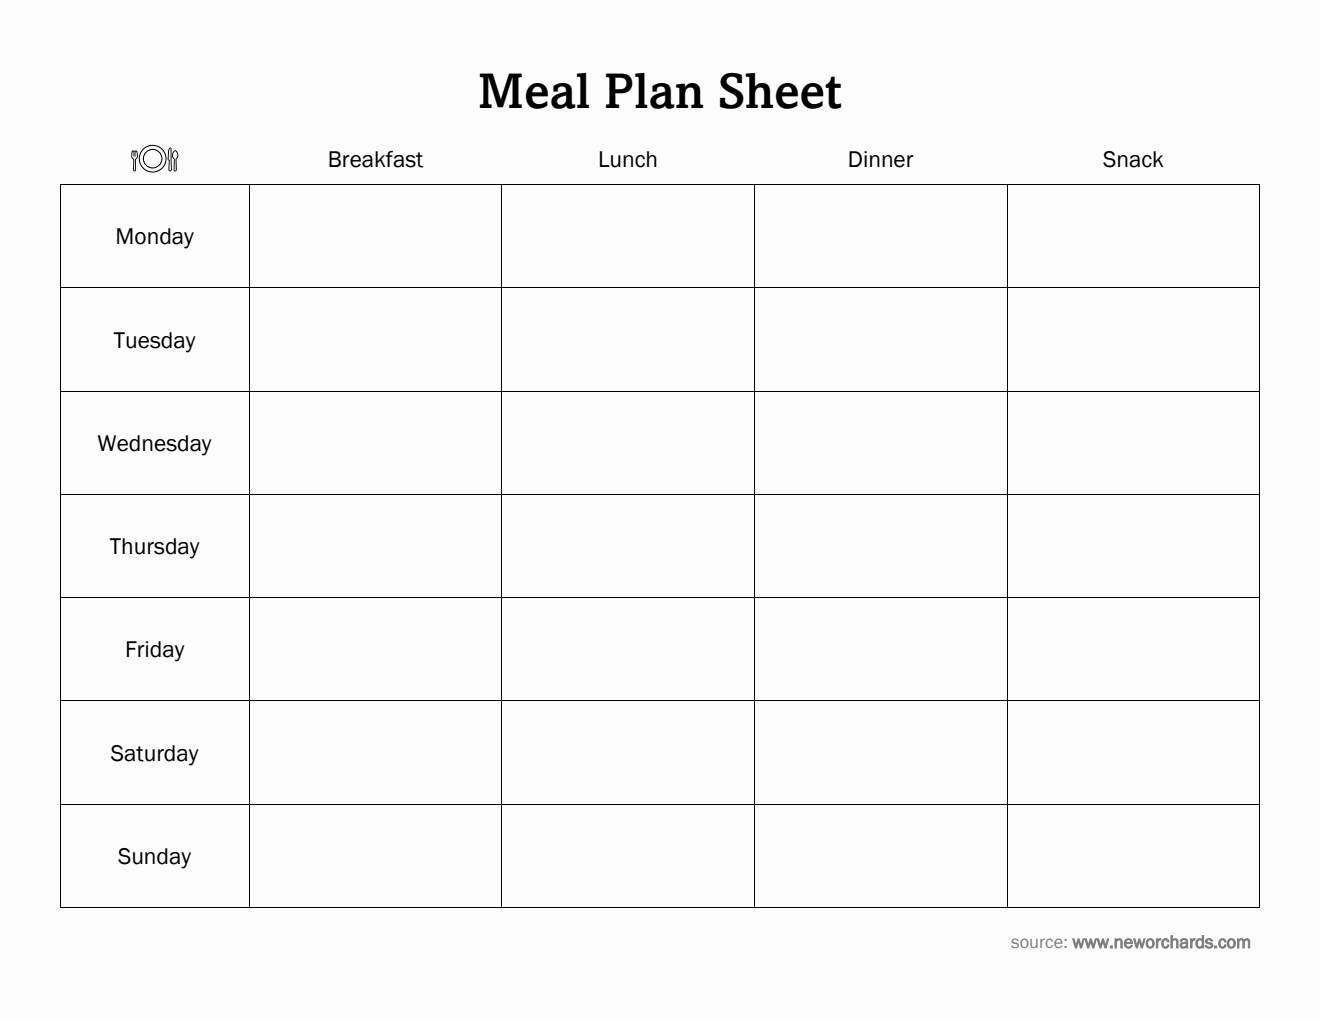 Free Printable Meal Plan Sheet in Word Format